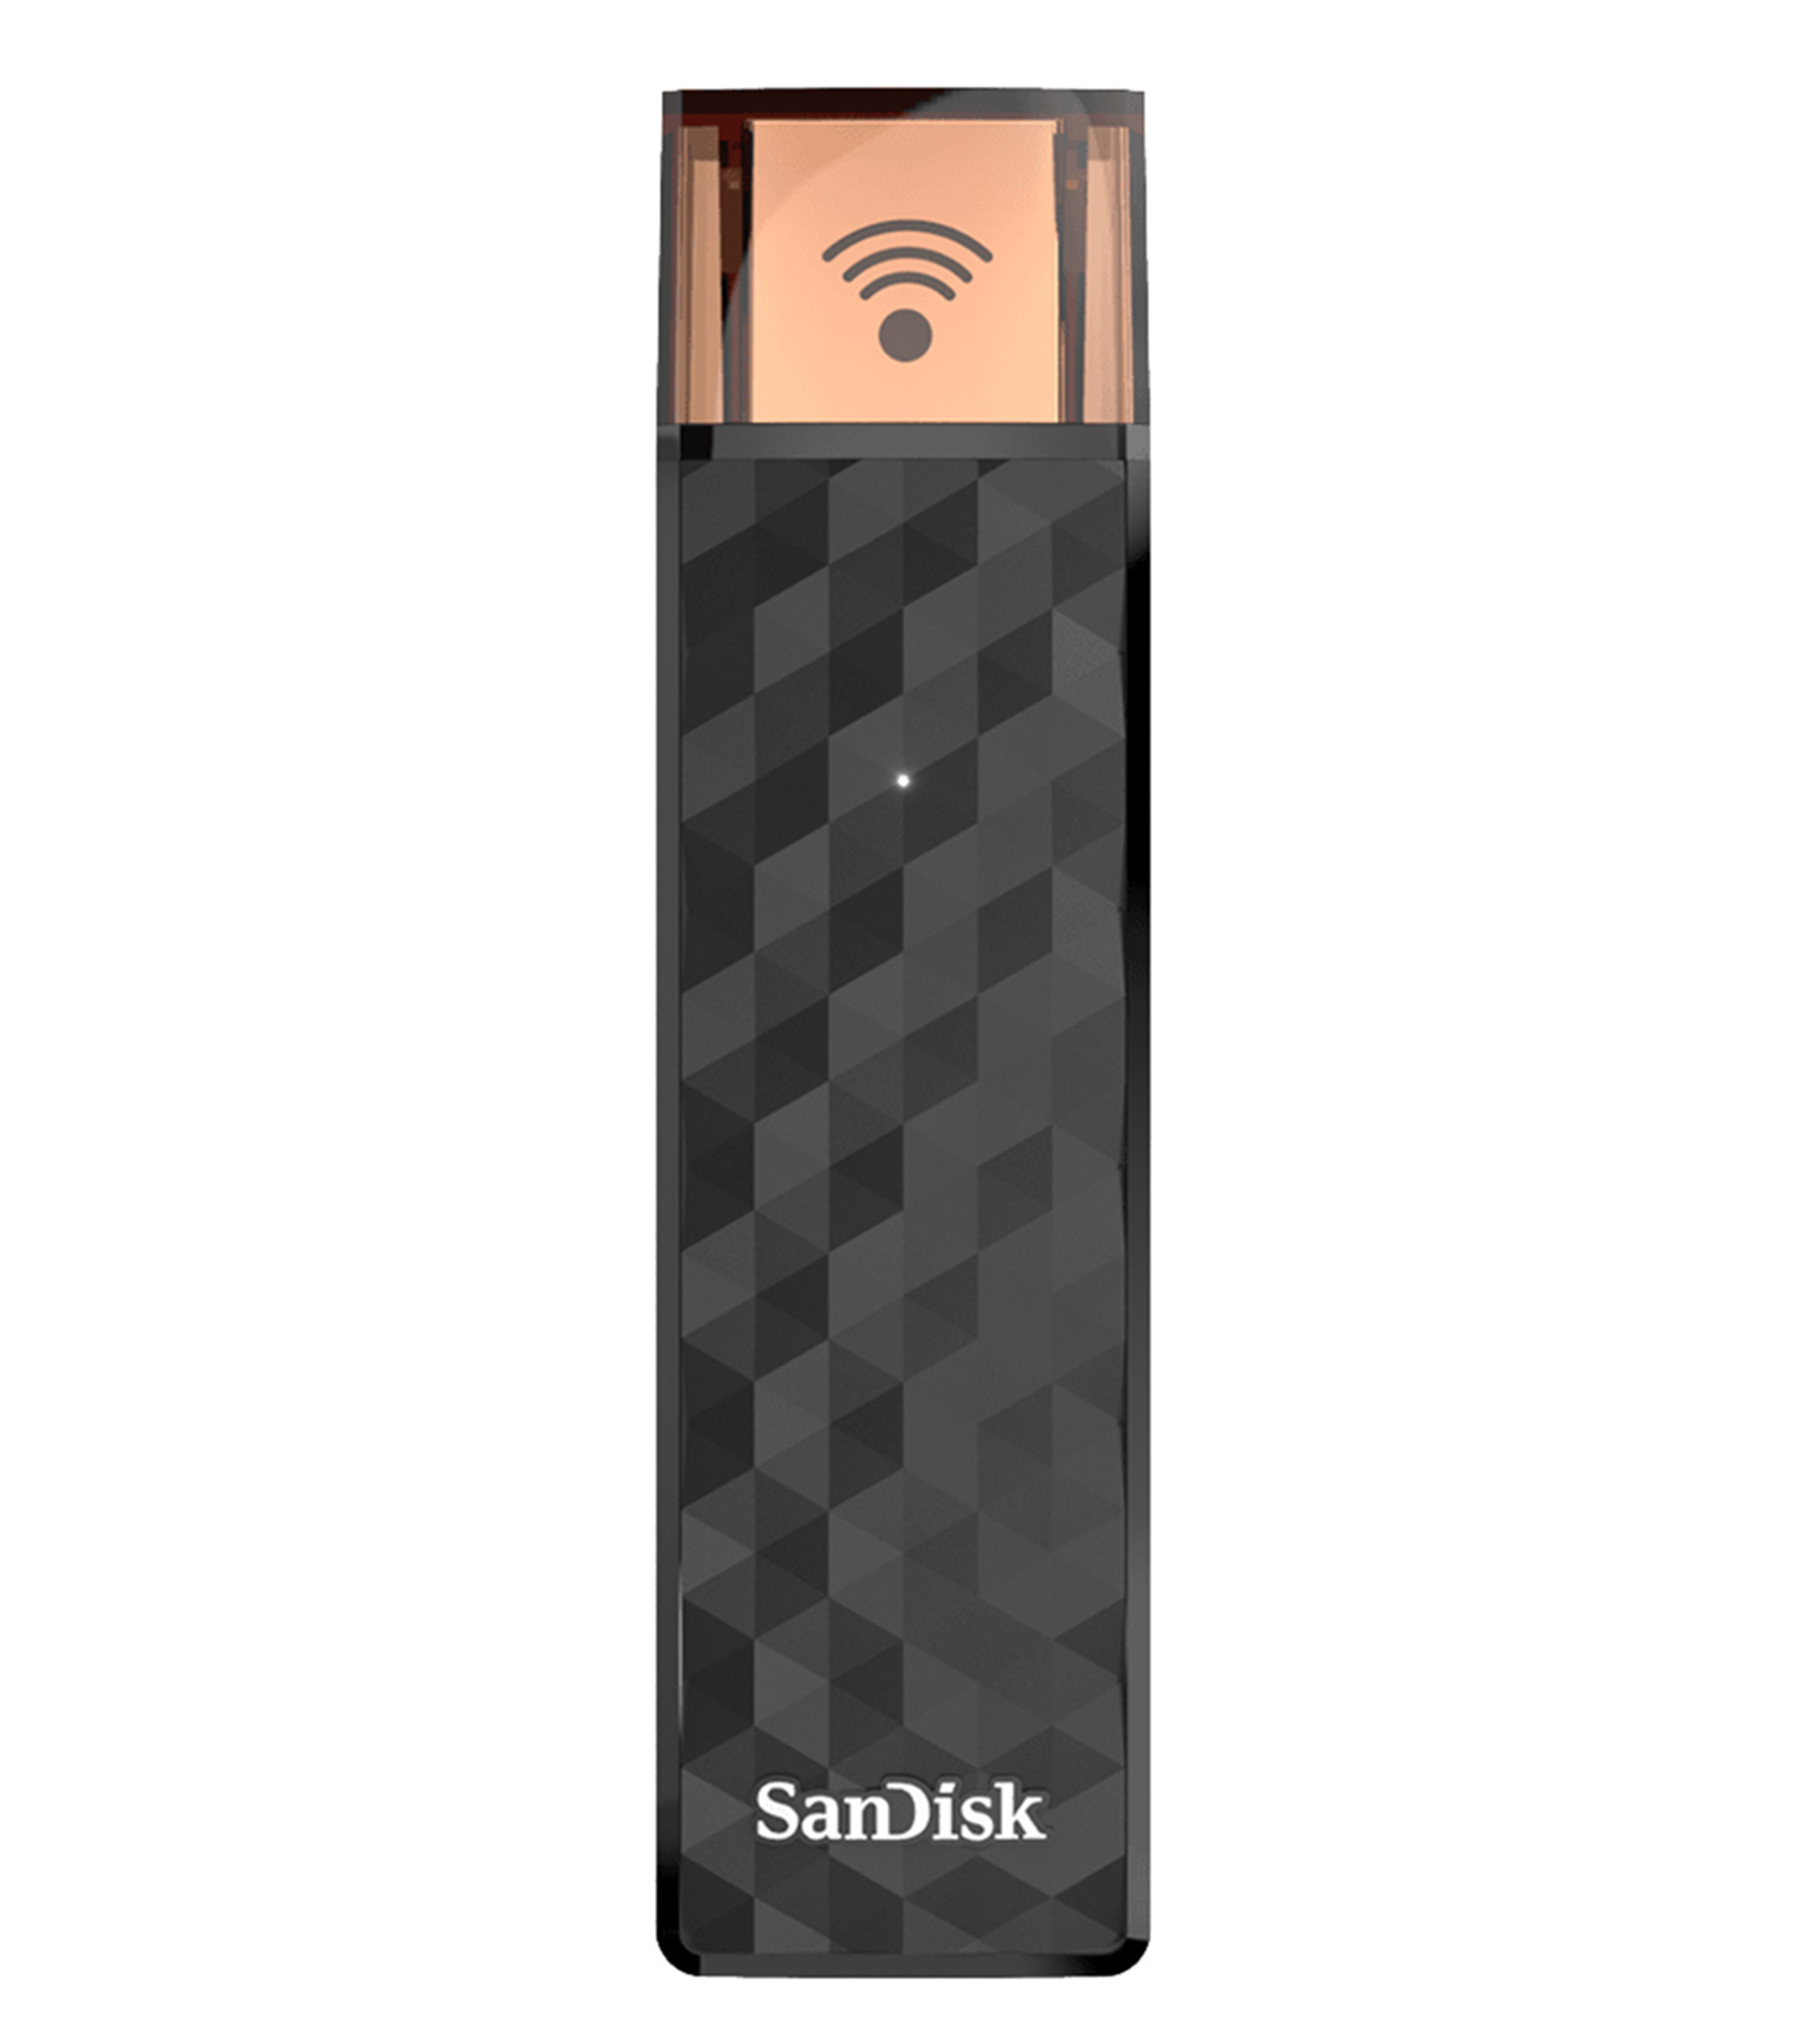 Memoria USB de Sandisk con WiFi Integrado